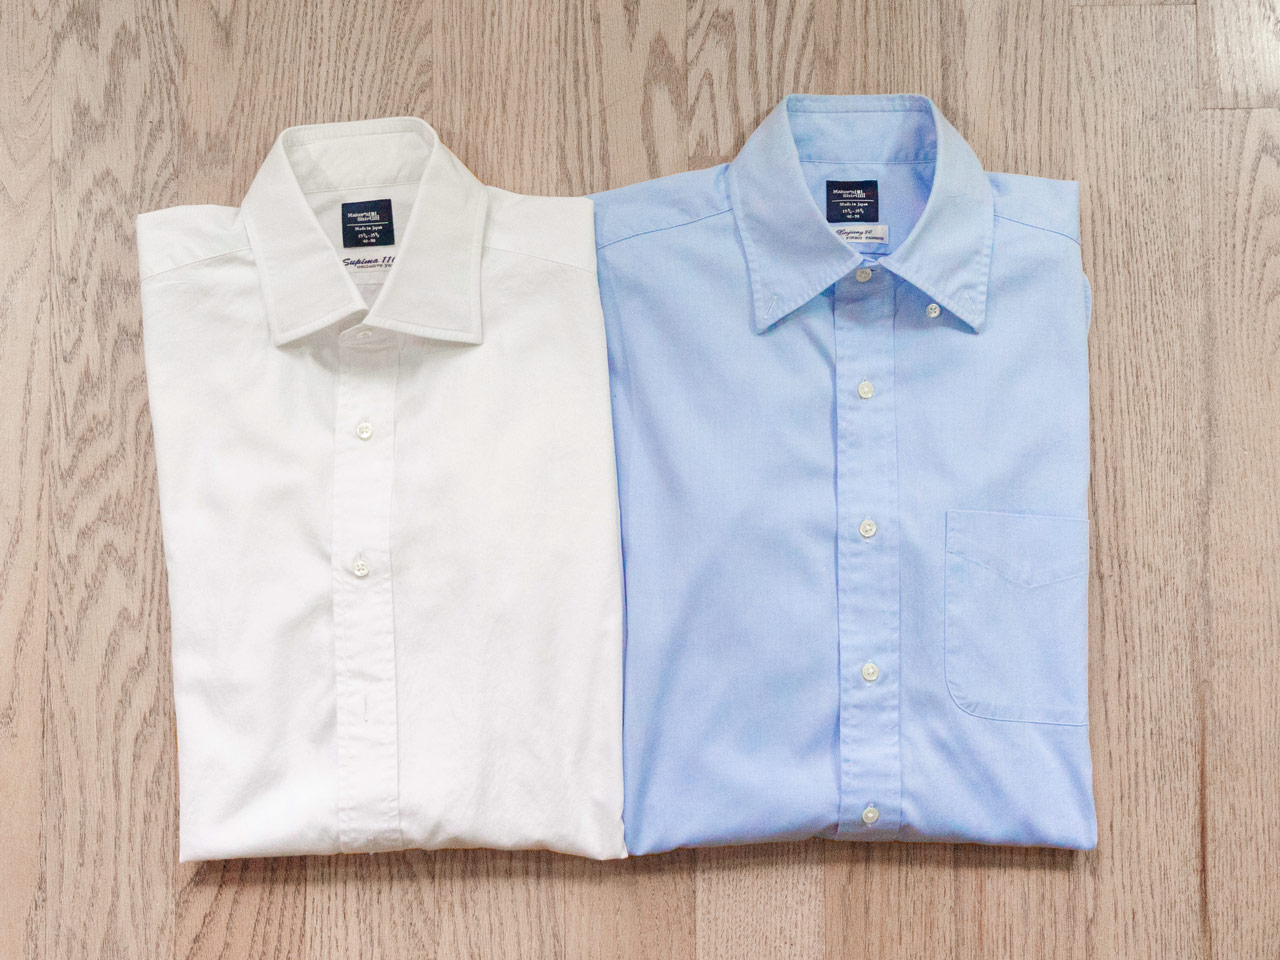 effortless essentials minimalist wardrobe - dress shirts